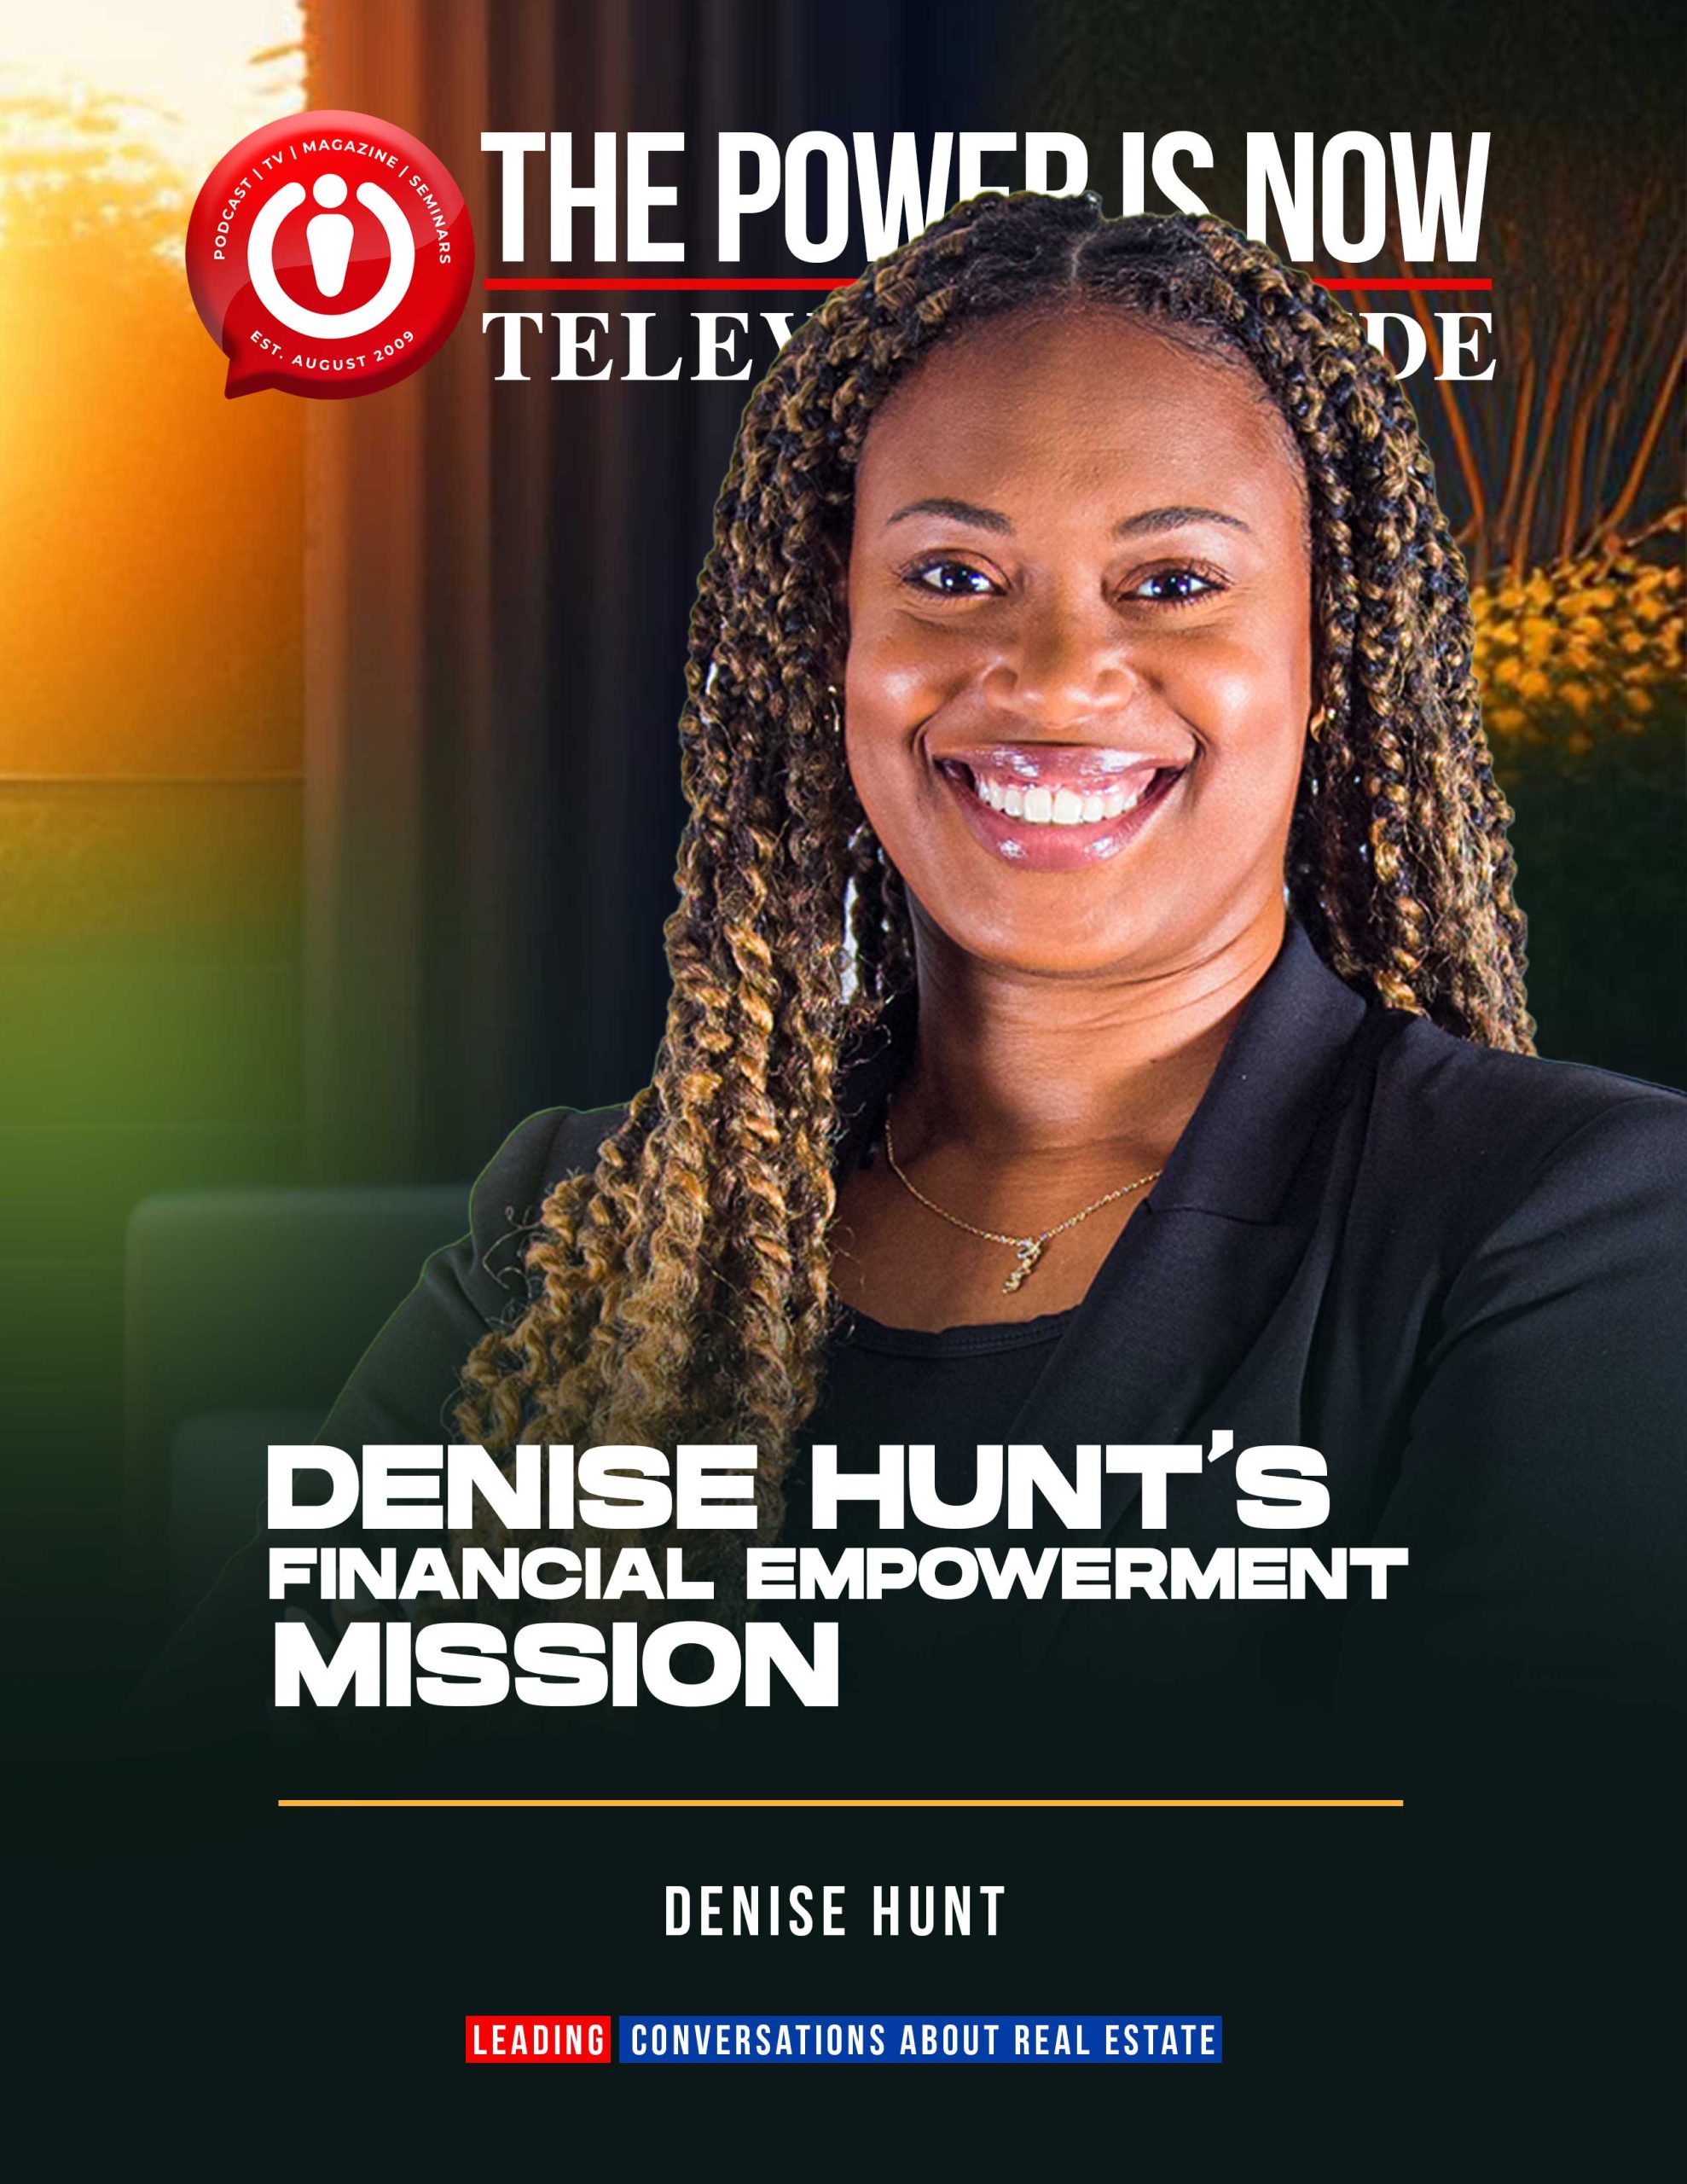 Denise Hunt's Financial Empowerment Mission